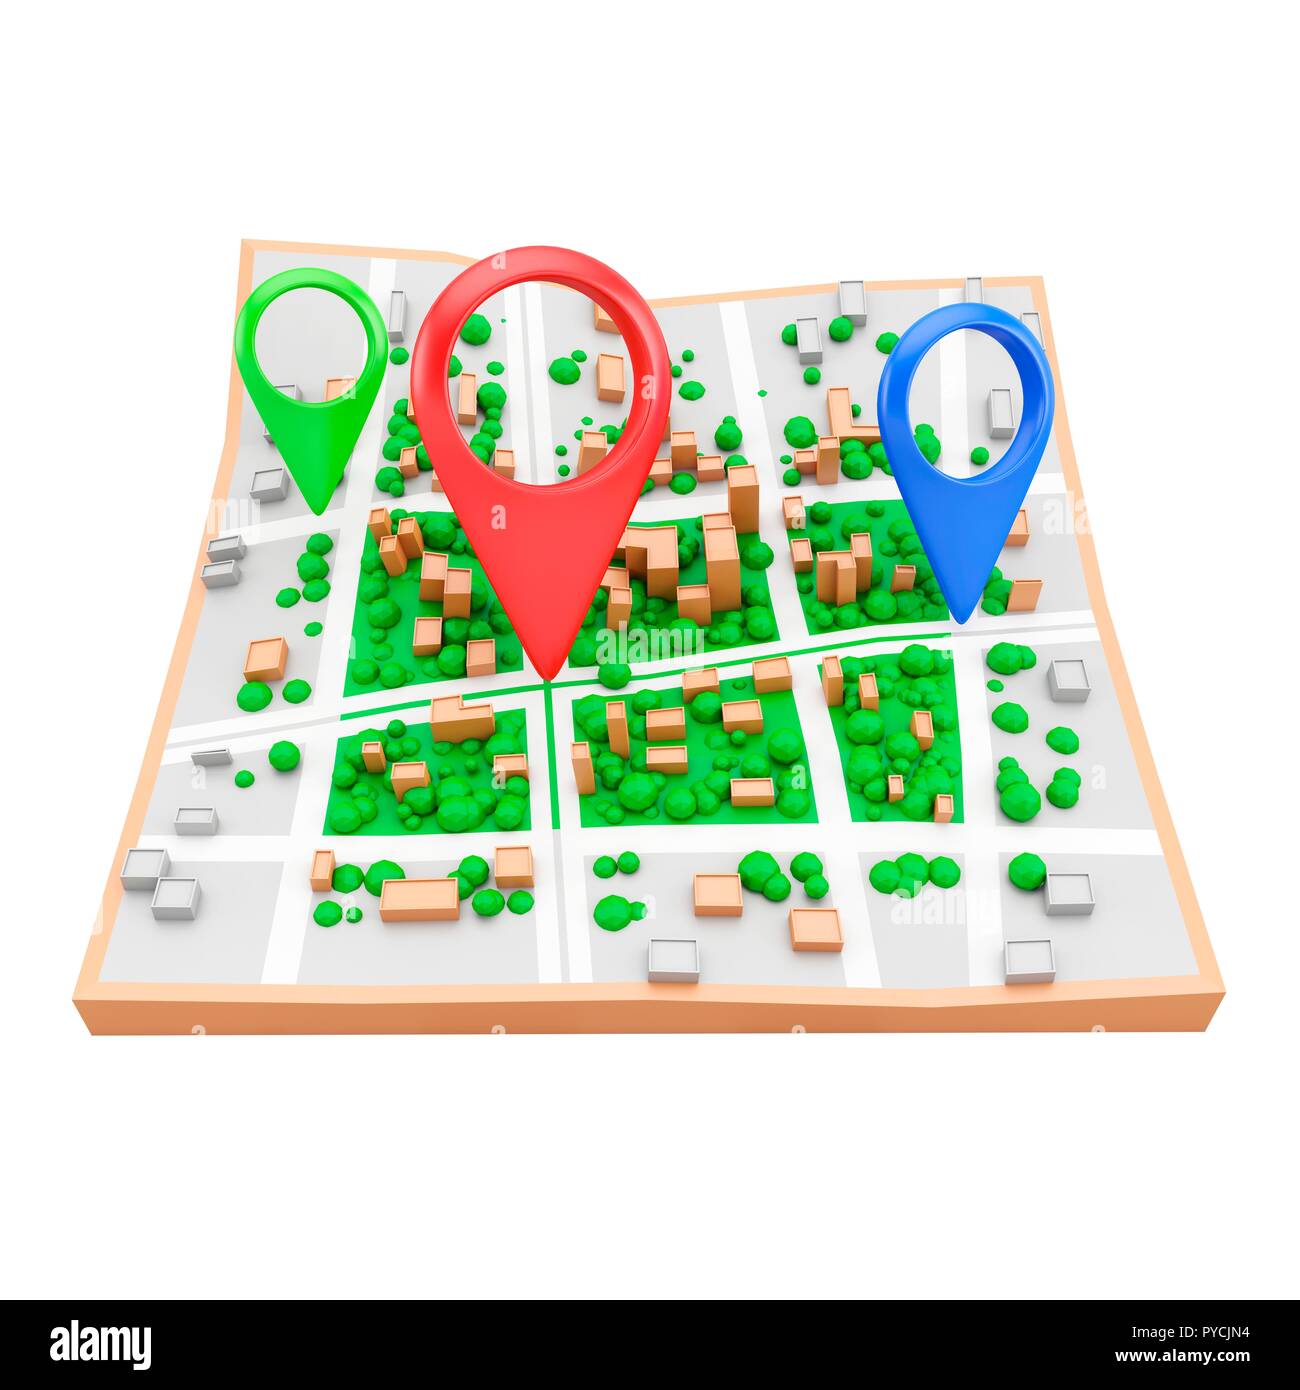 Location pins on city map, illustration. Stock Photo